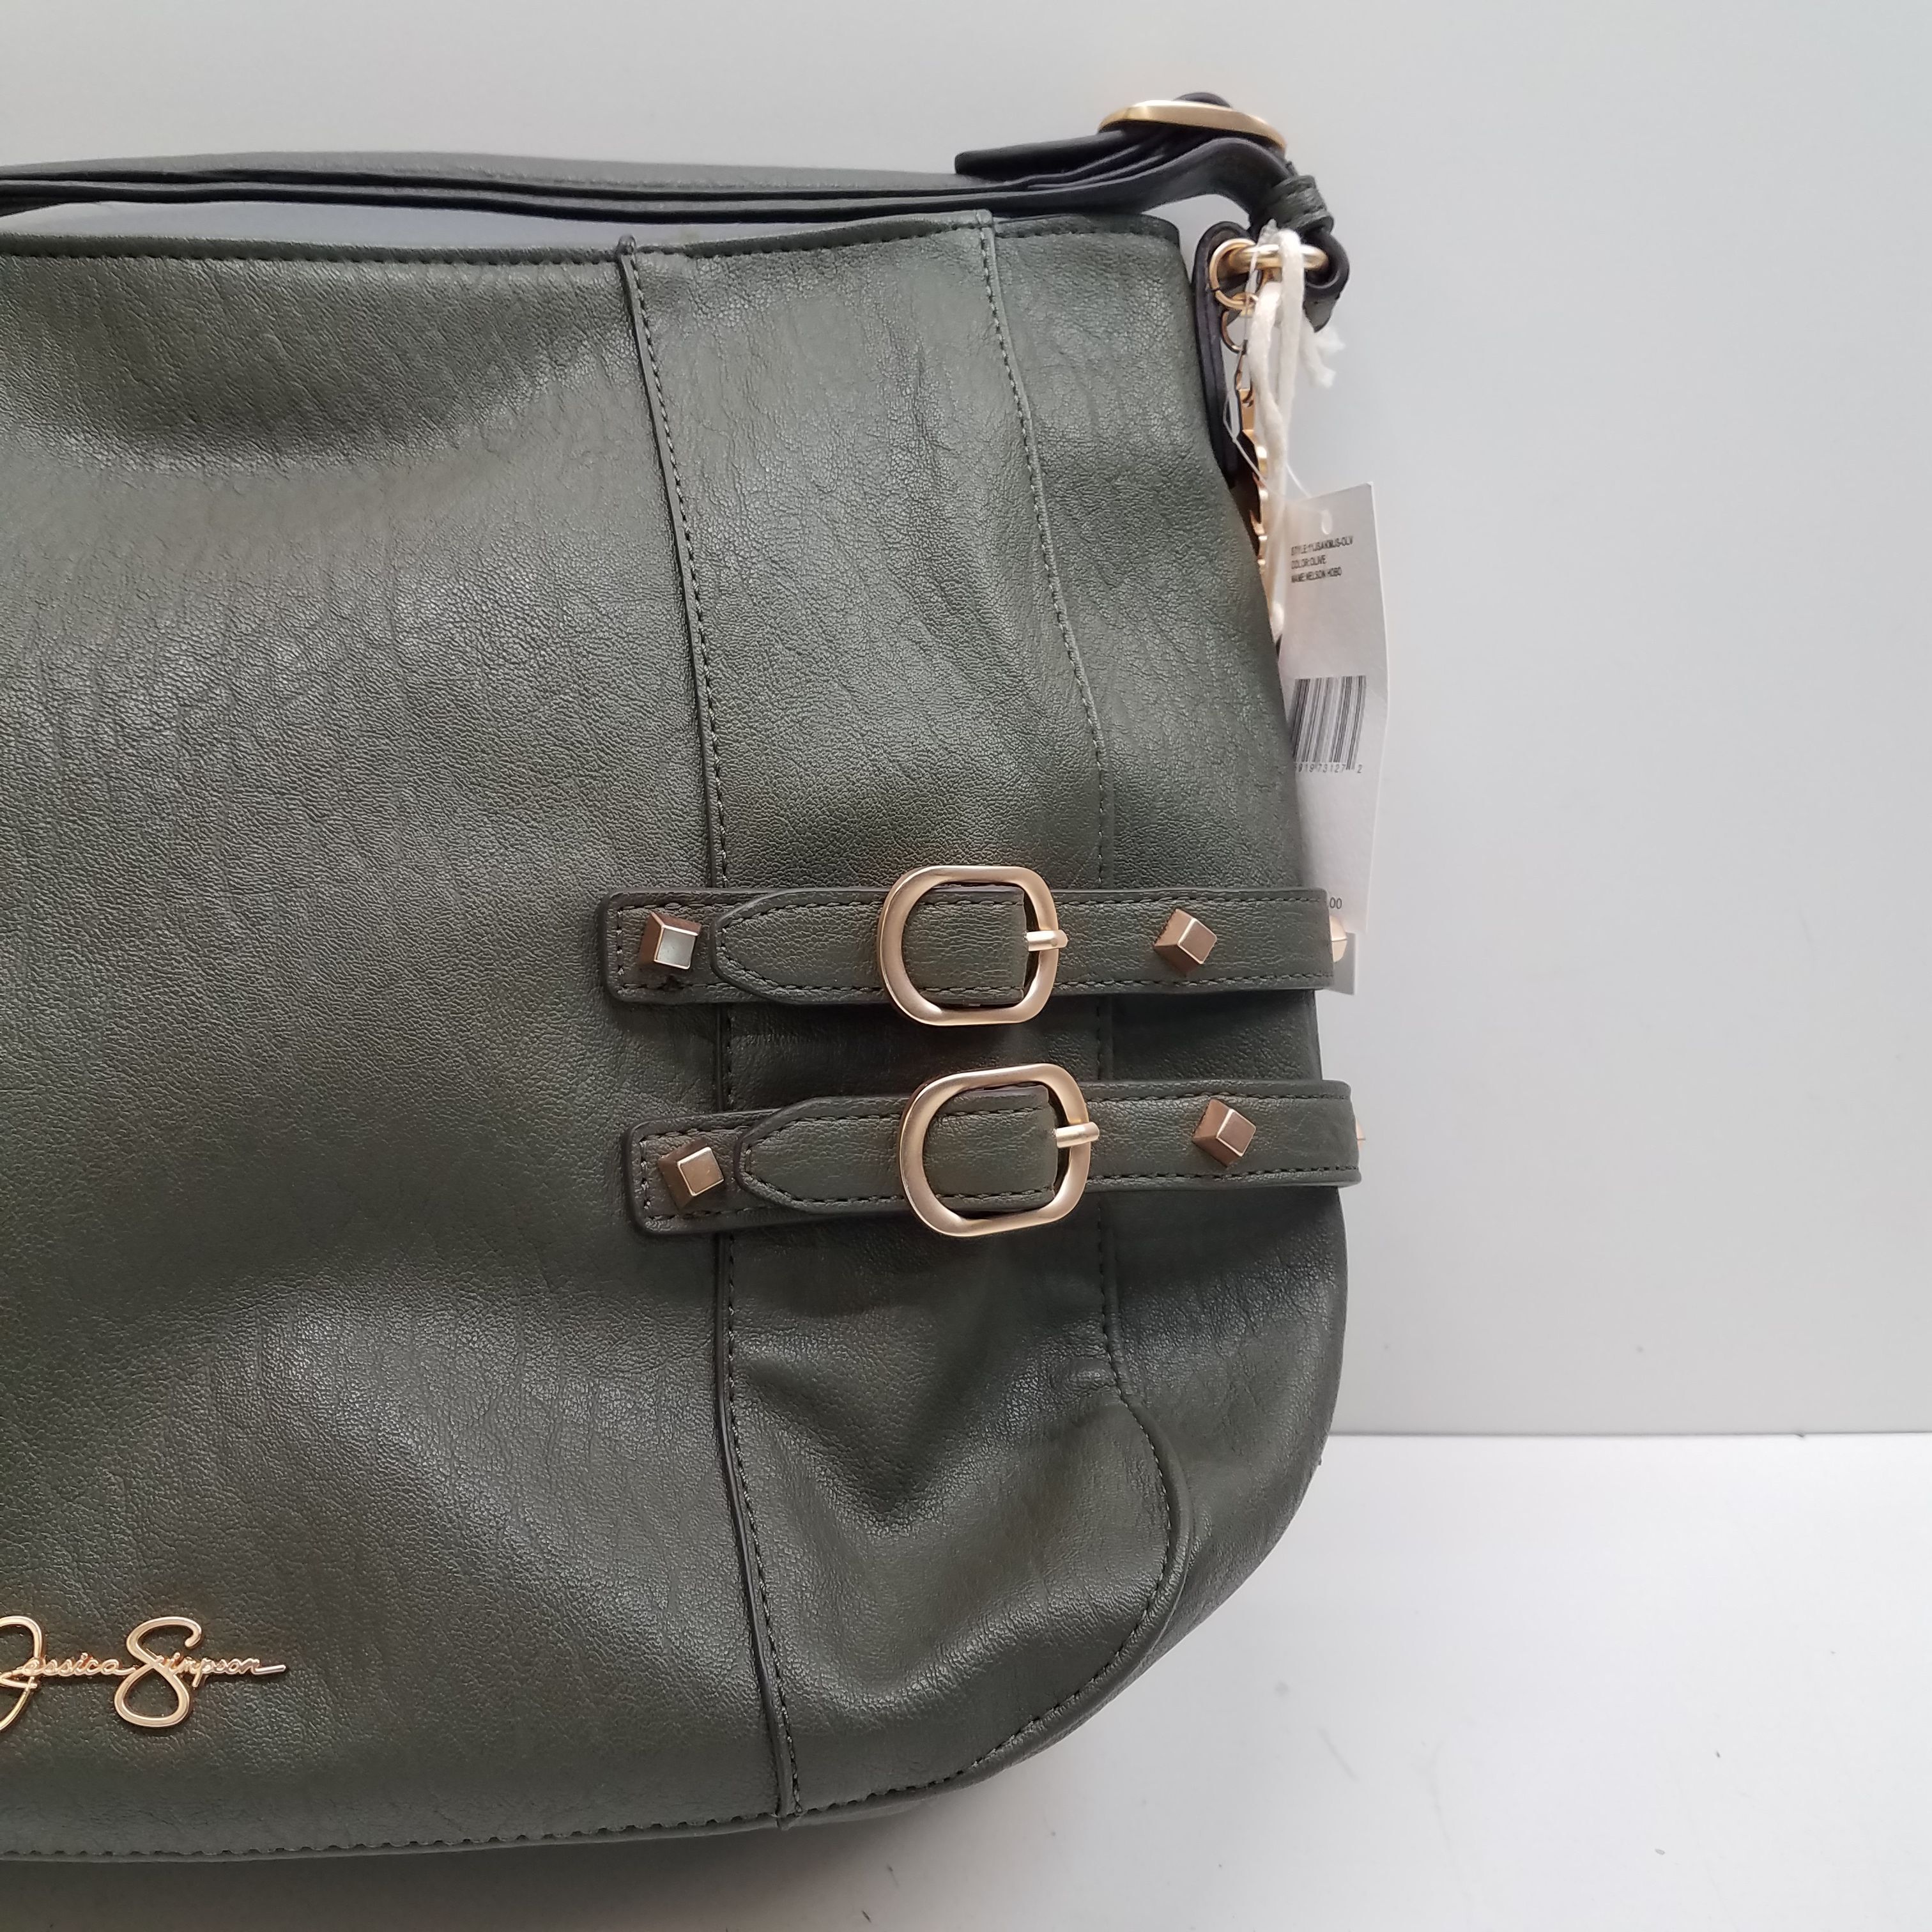 Jessica Simpson Handbags On Sale Up To 90% Off Retail | ThredUp